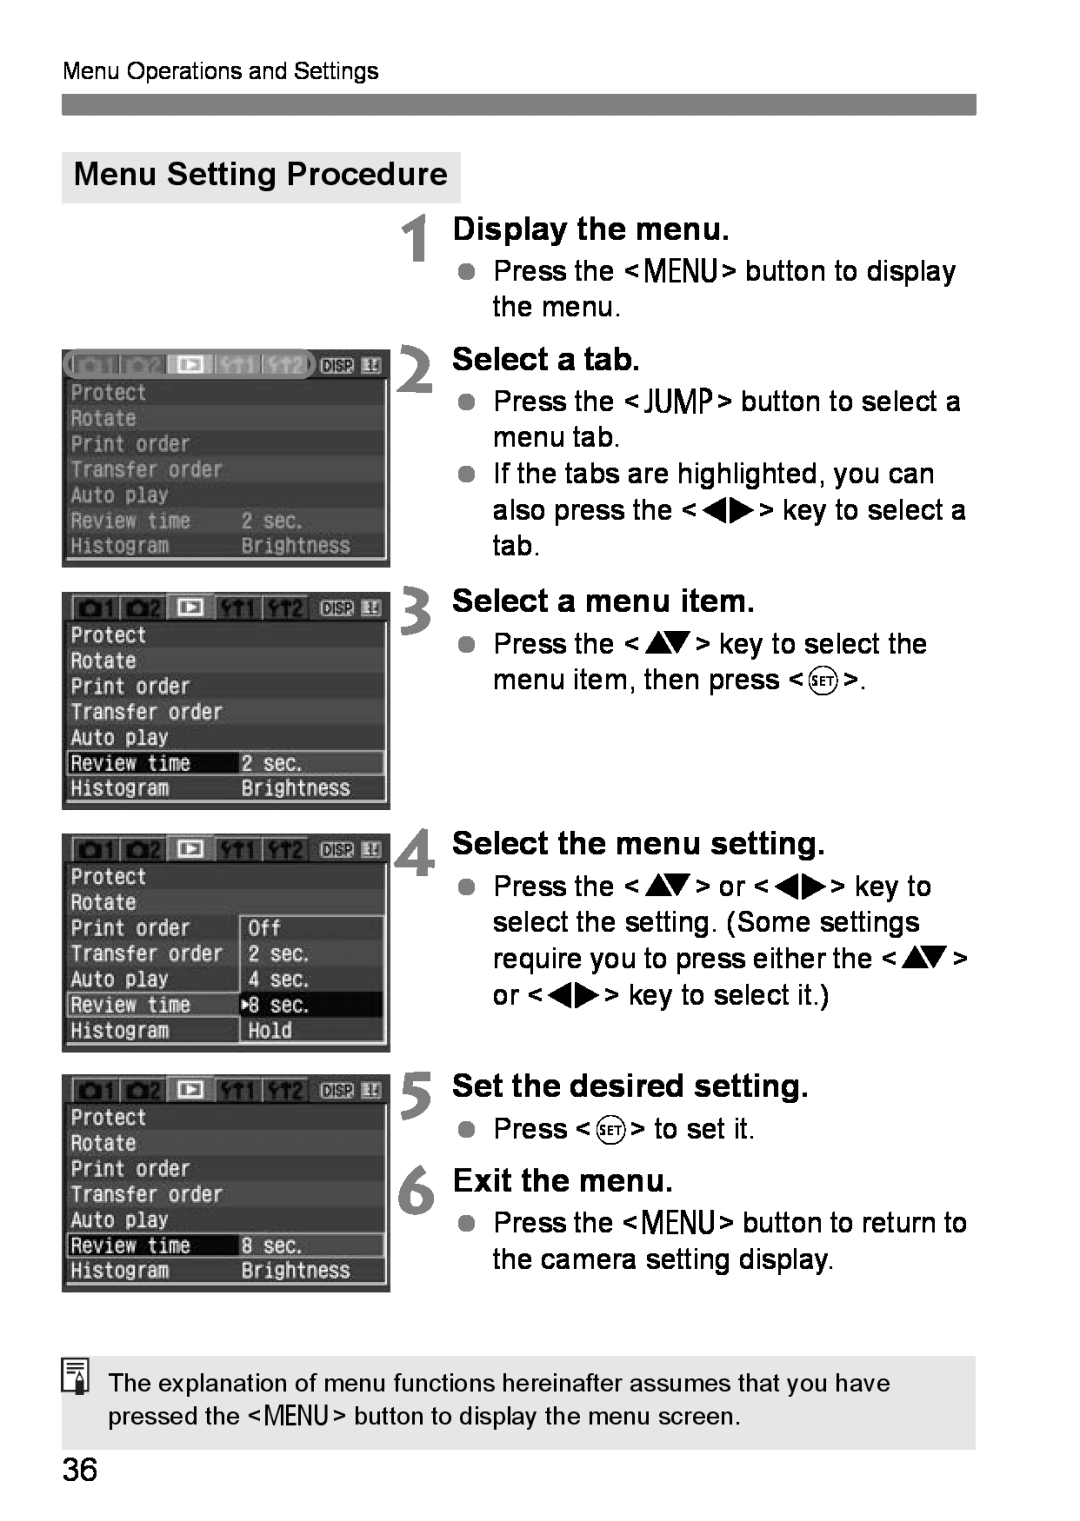 Canon EOS DIGITAL REBEL XTI Menu Setting Procedure 1 Display the menu, Select a tab, Select a menu item, Exit the menu 